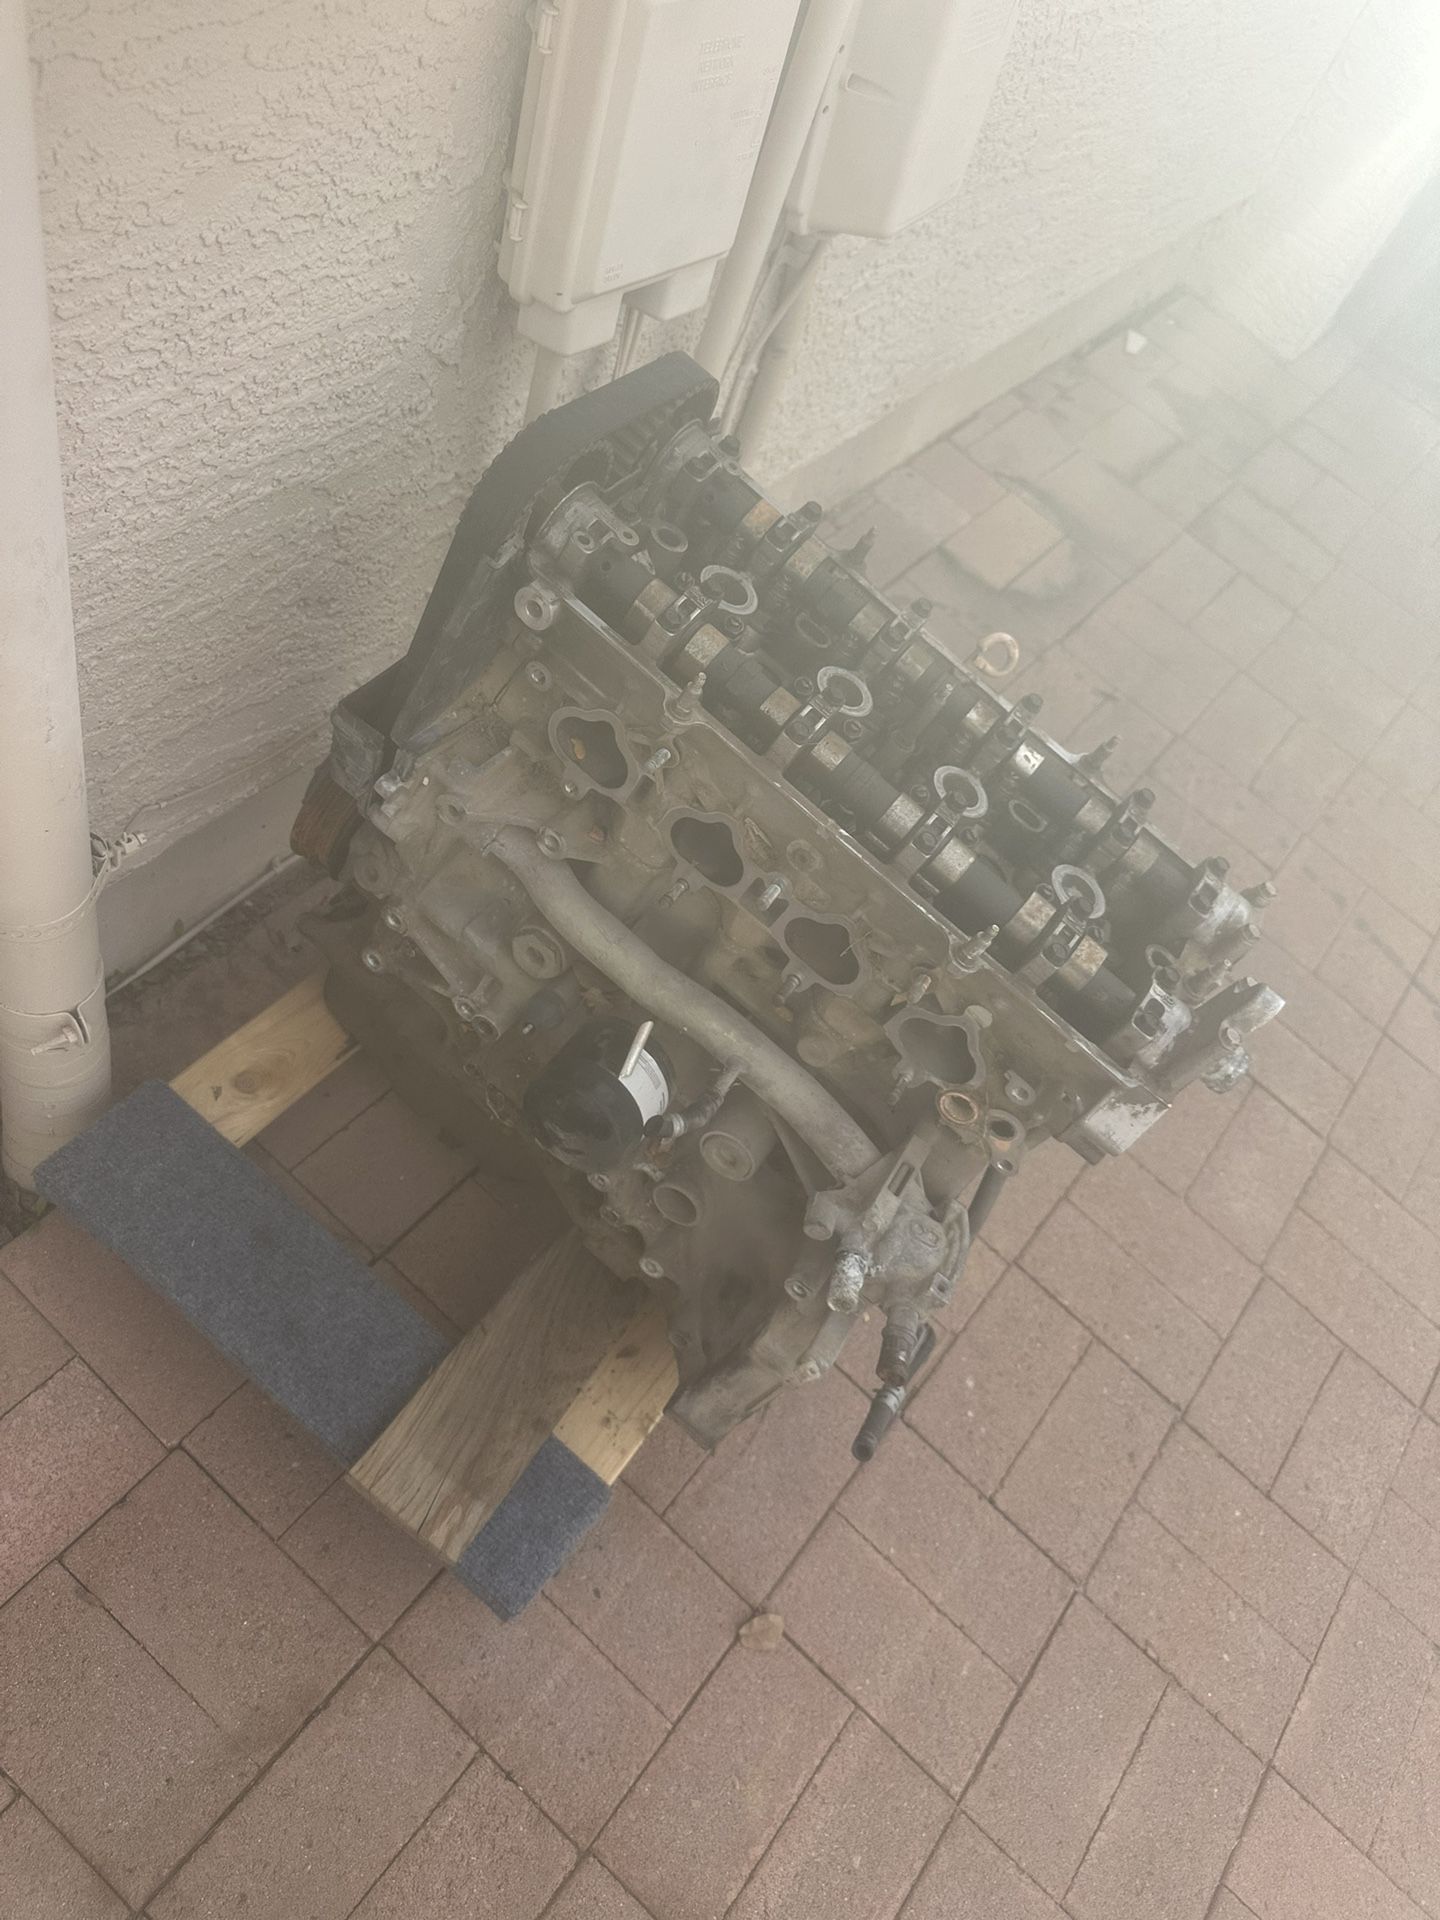 Acura Integra Engine B 18 B1